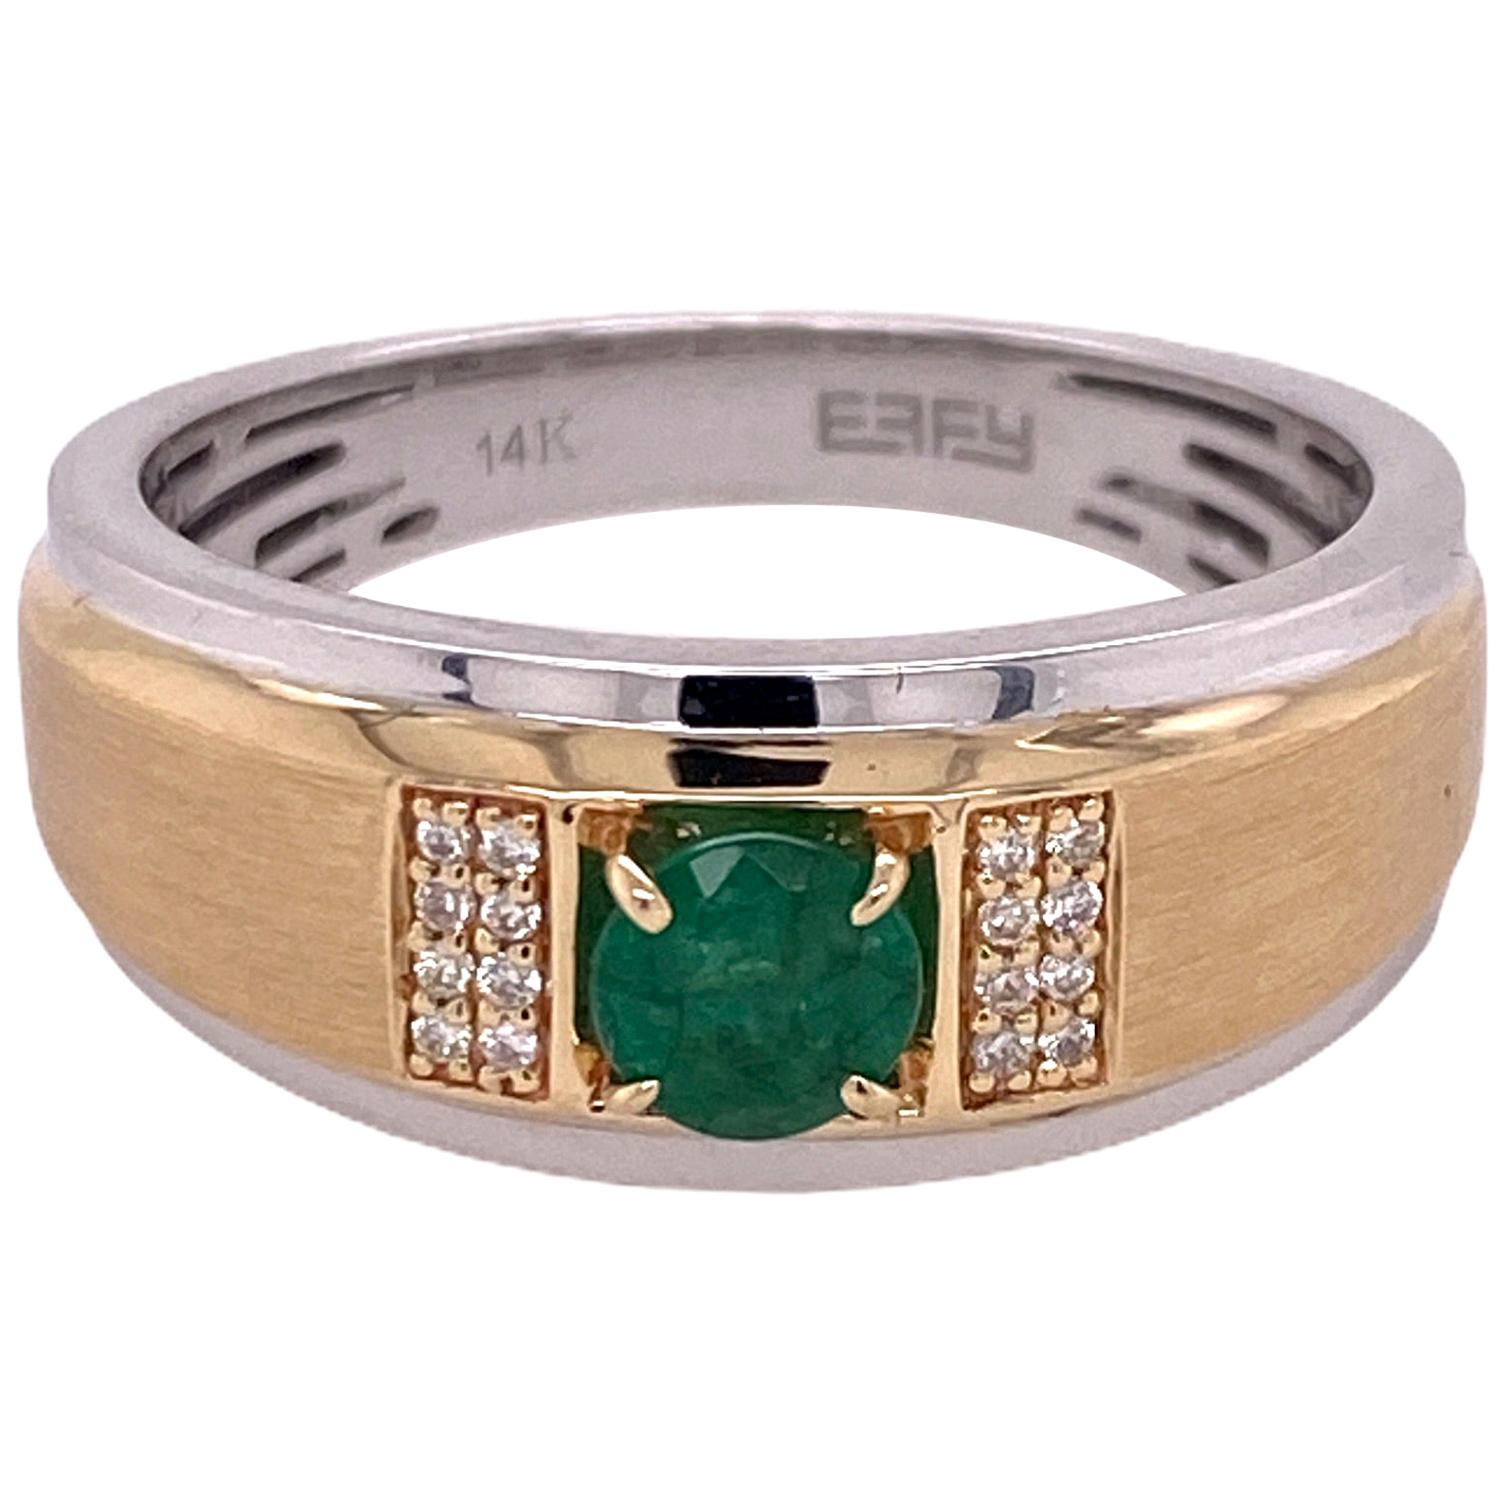 Effy Men's Emerald Diamond 14 Karat Two-Tone Ring